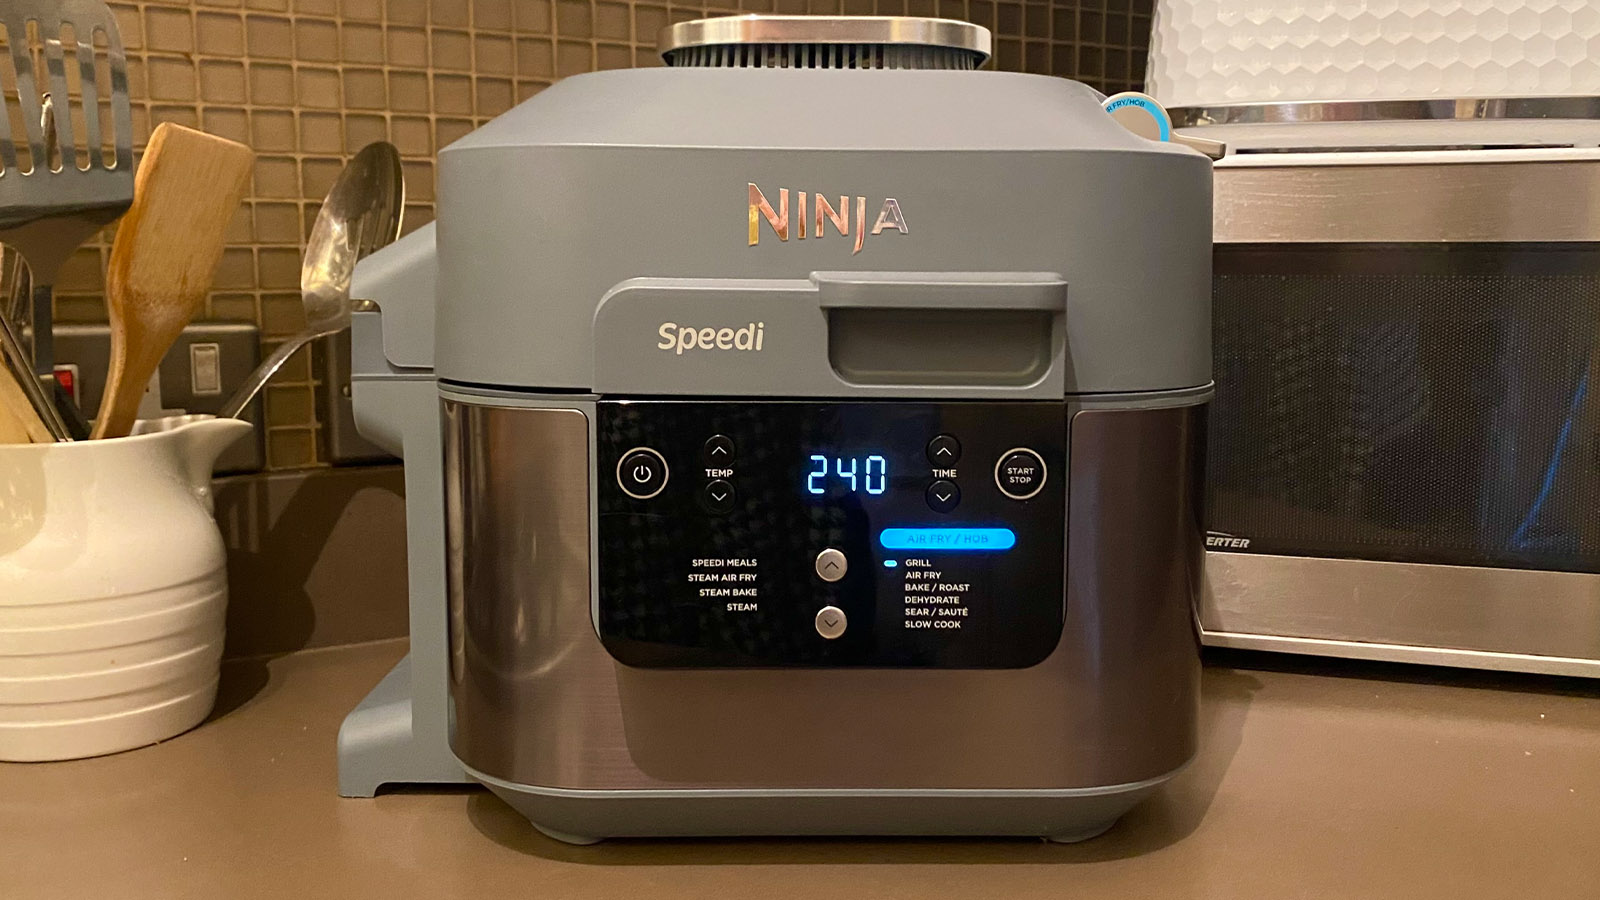  Ninja Speedi - Best multifunctional air fryer